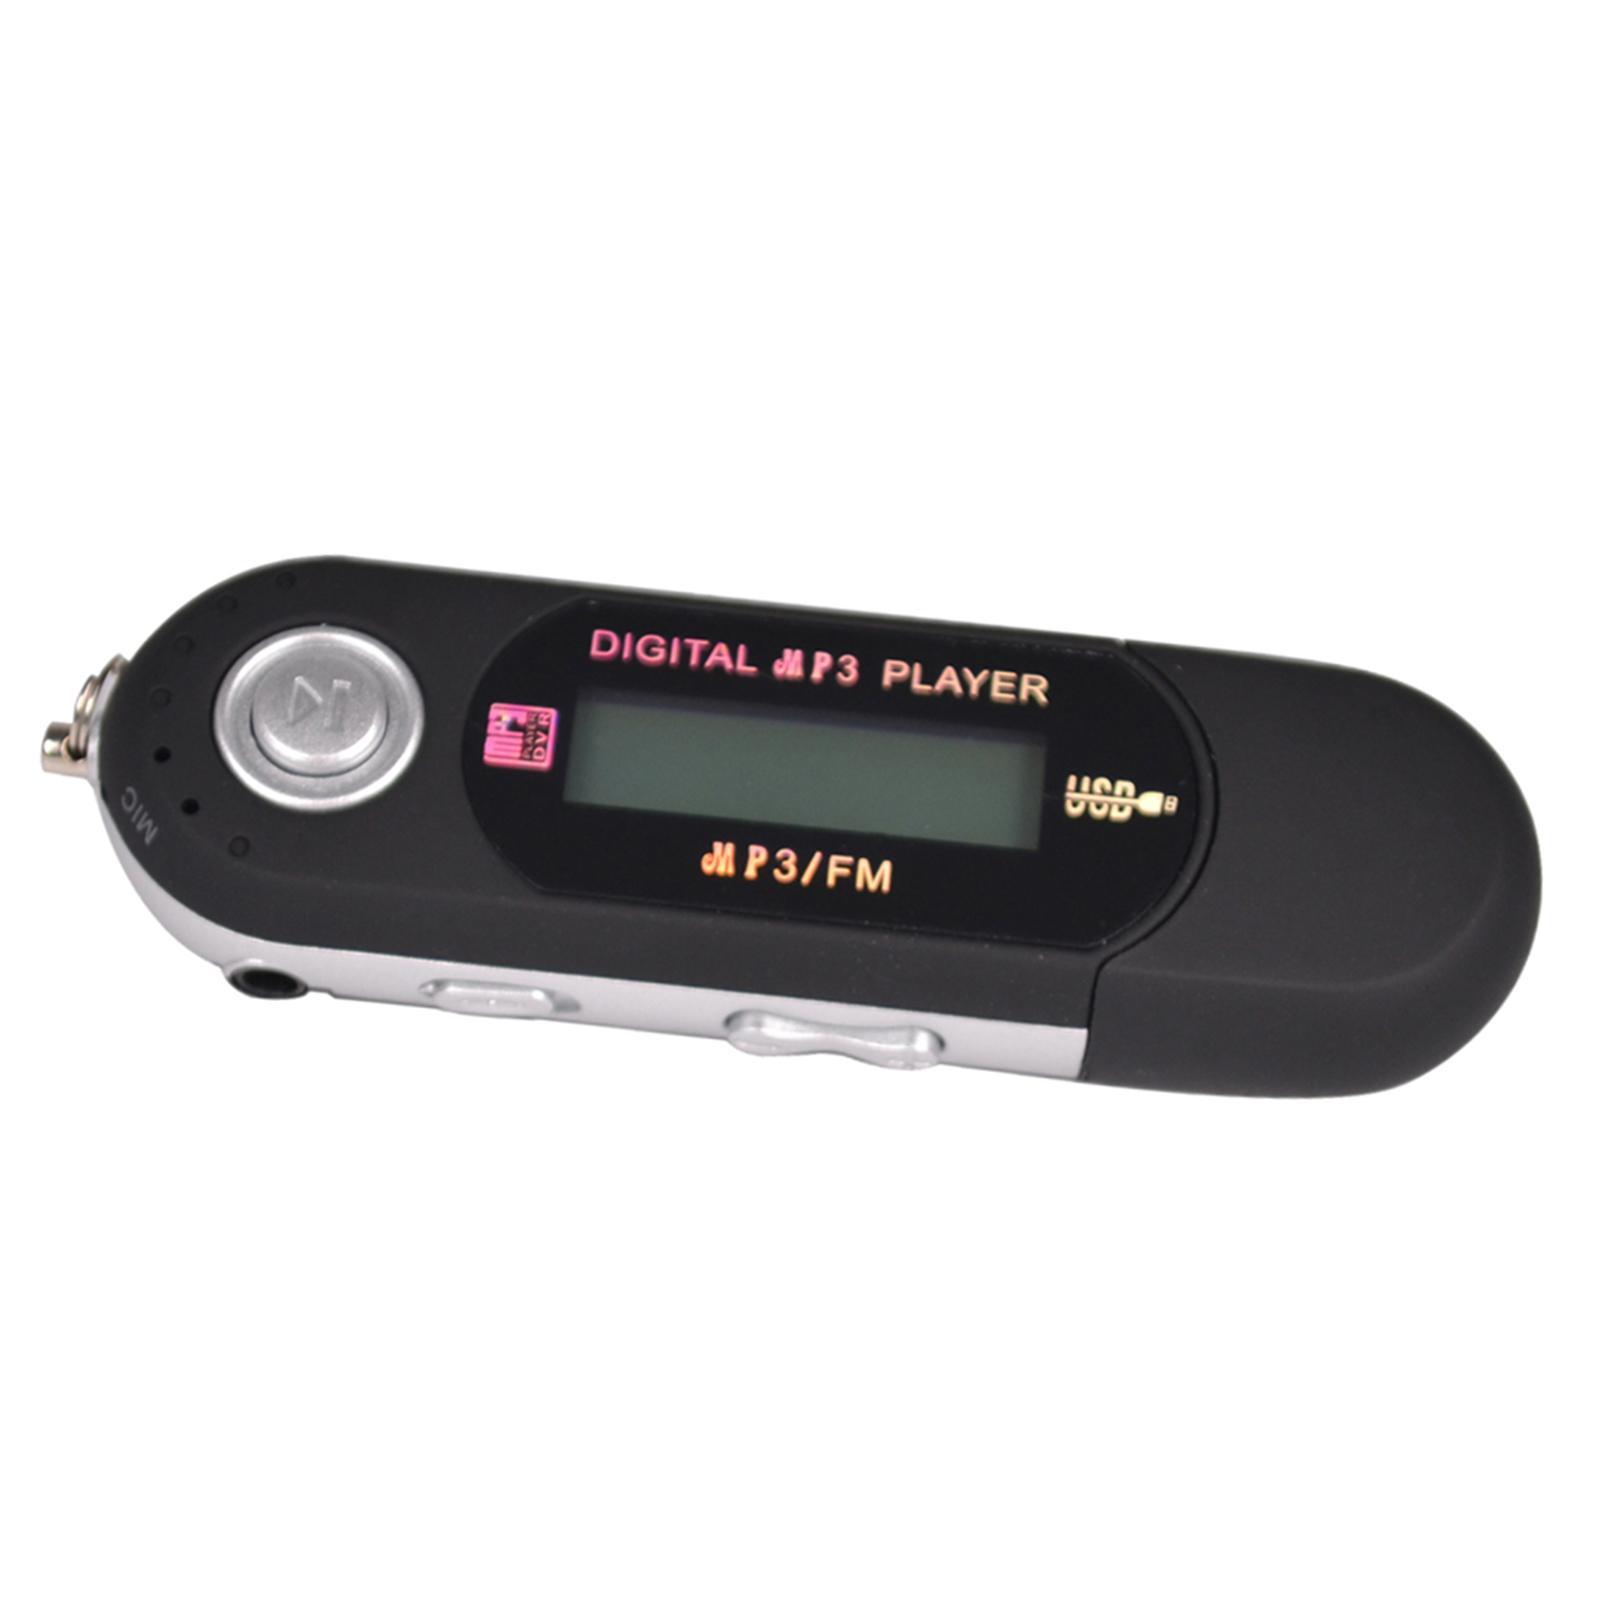 4GB LCD MP3 MP4 Music Video Media Player ,Black